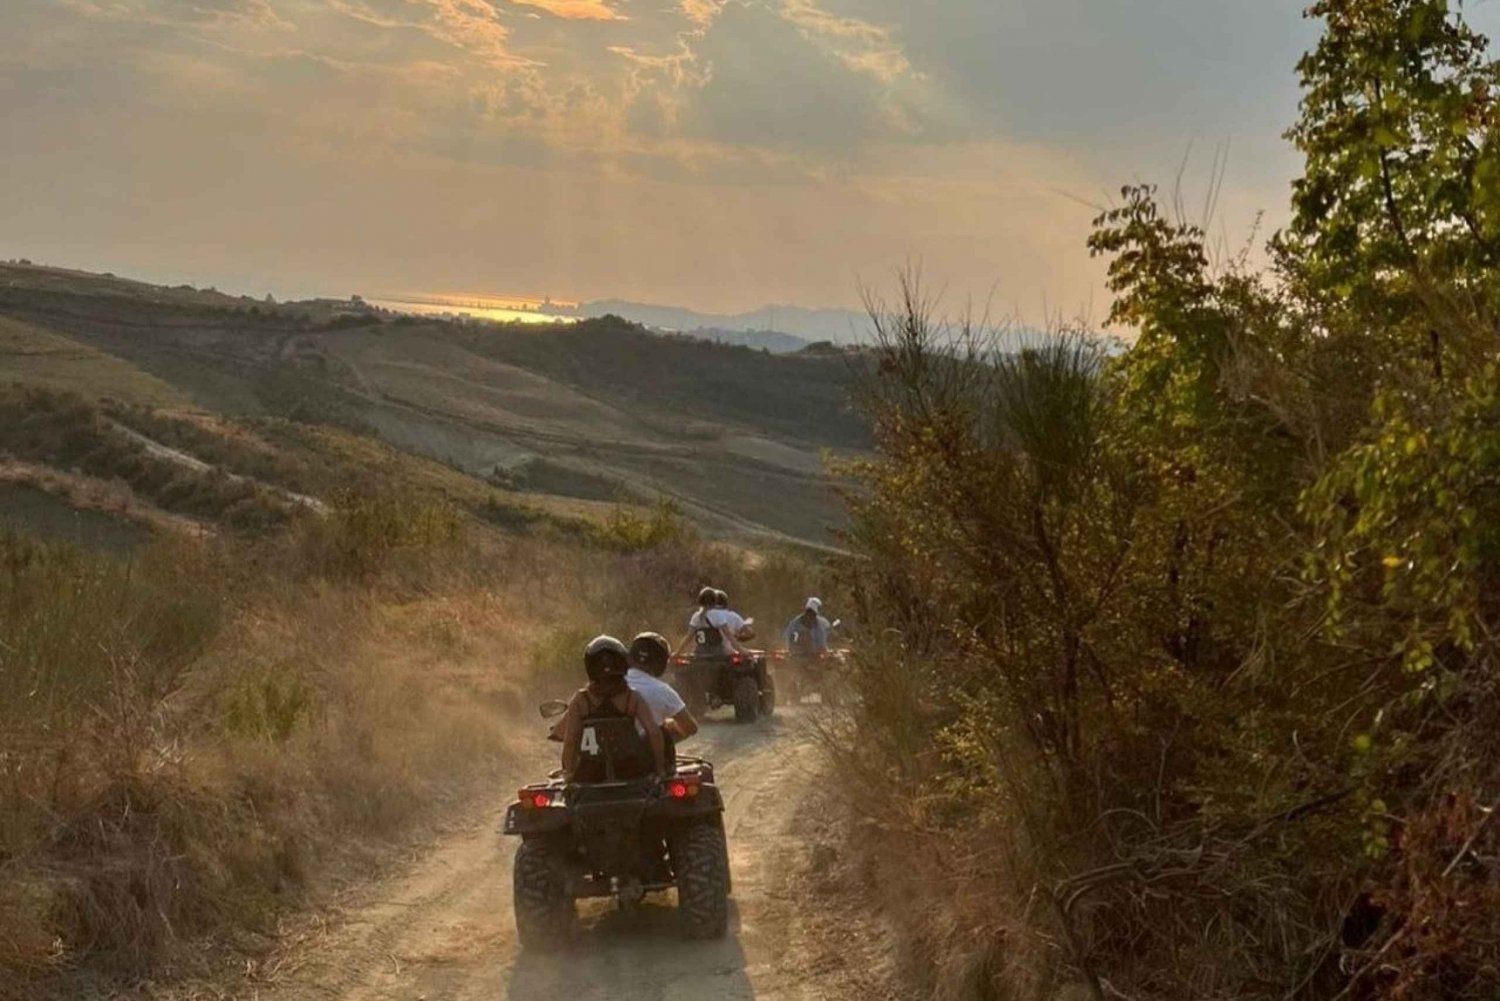 Durres: ATV Adventure Tour Through Vineyards and Hills